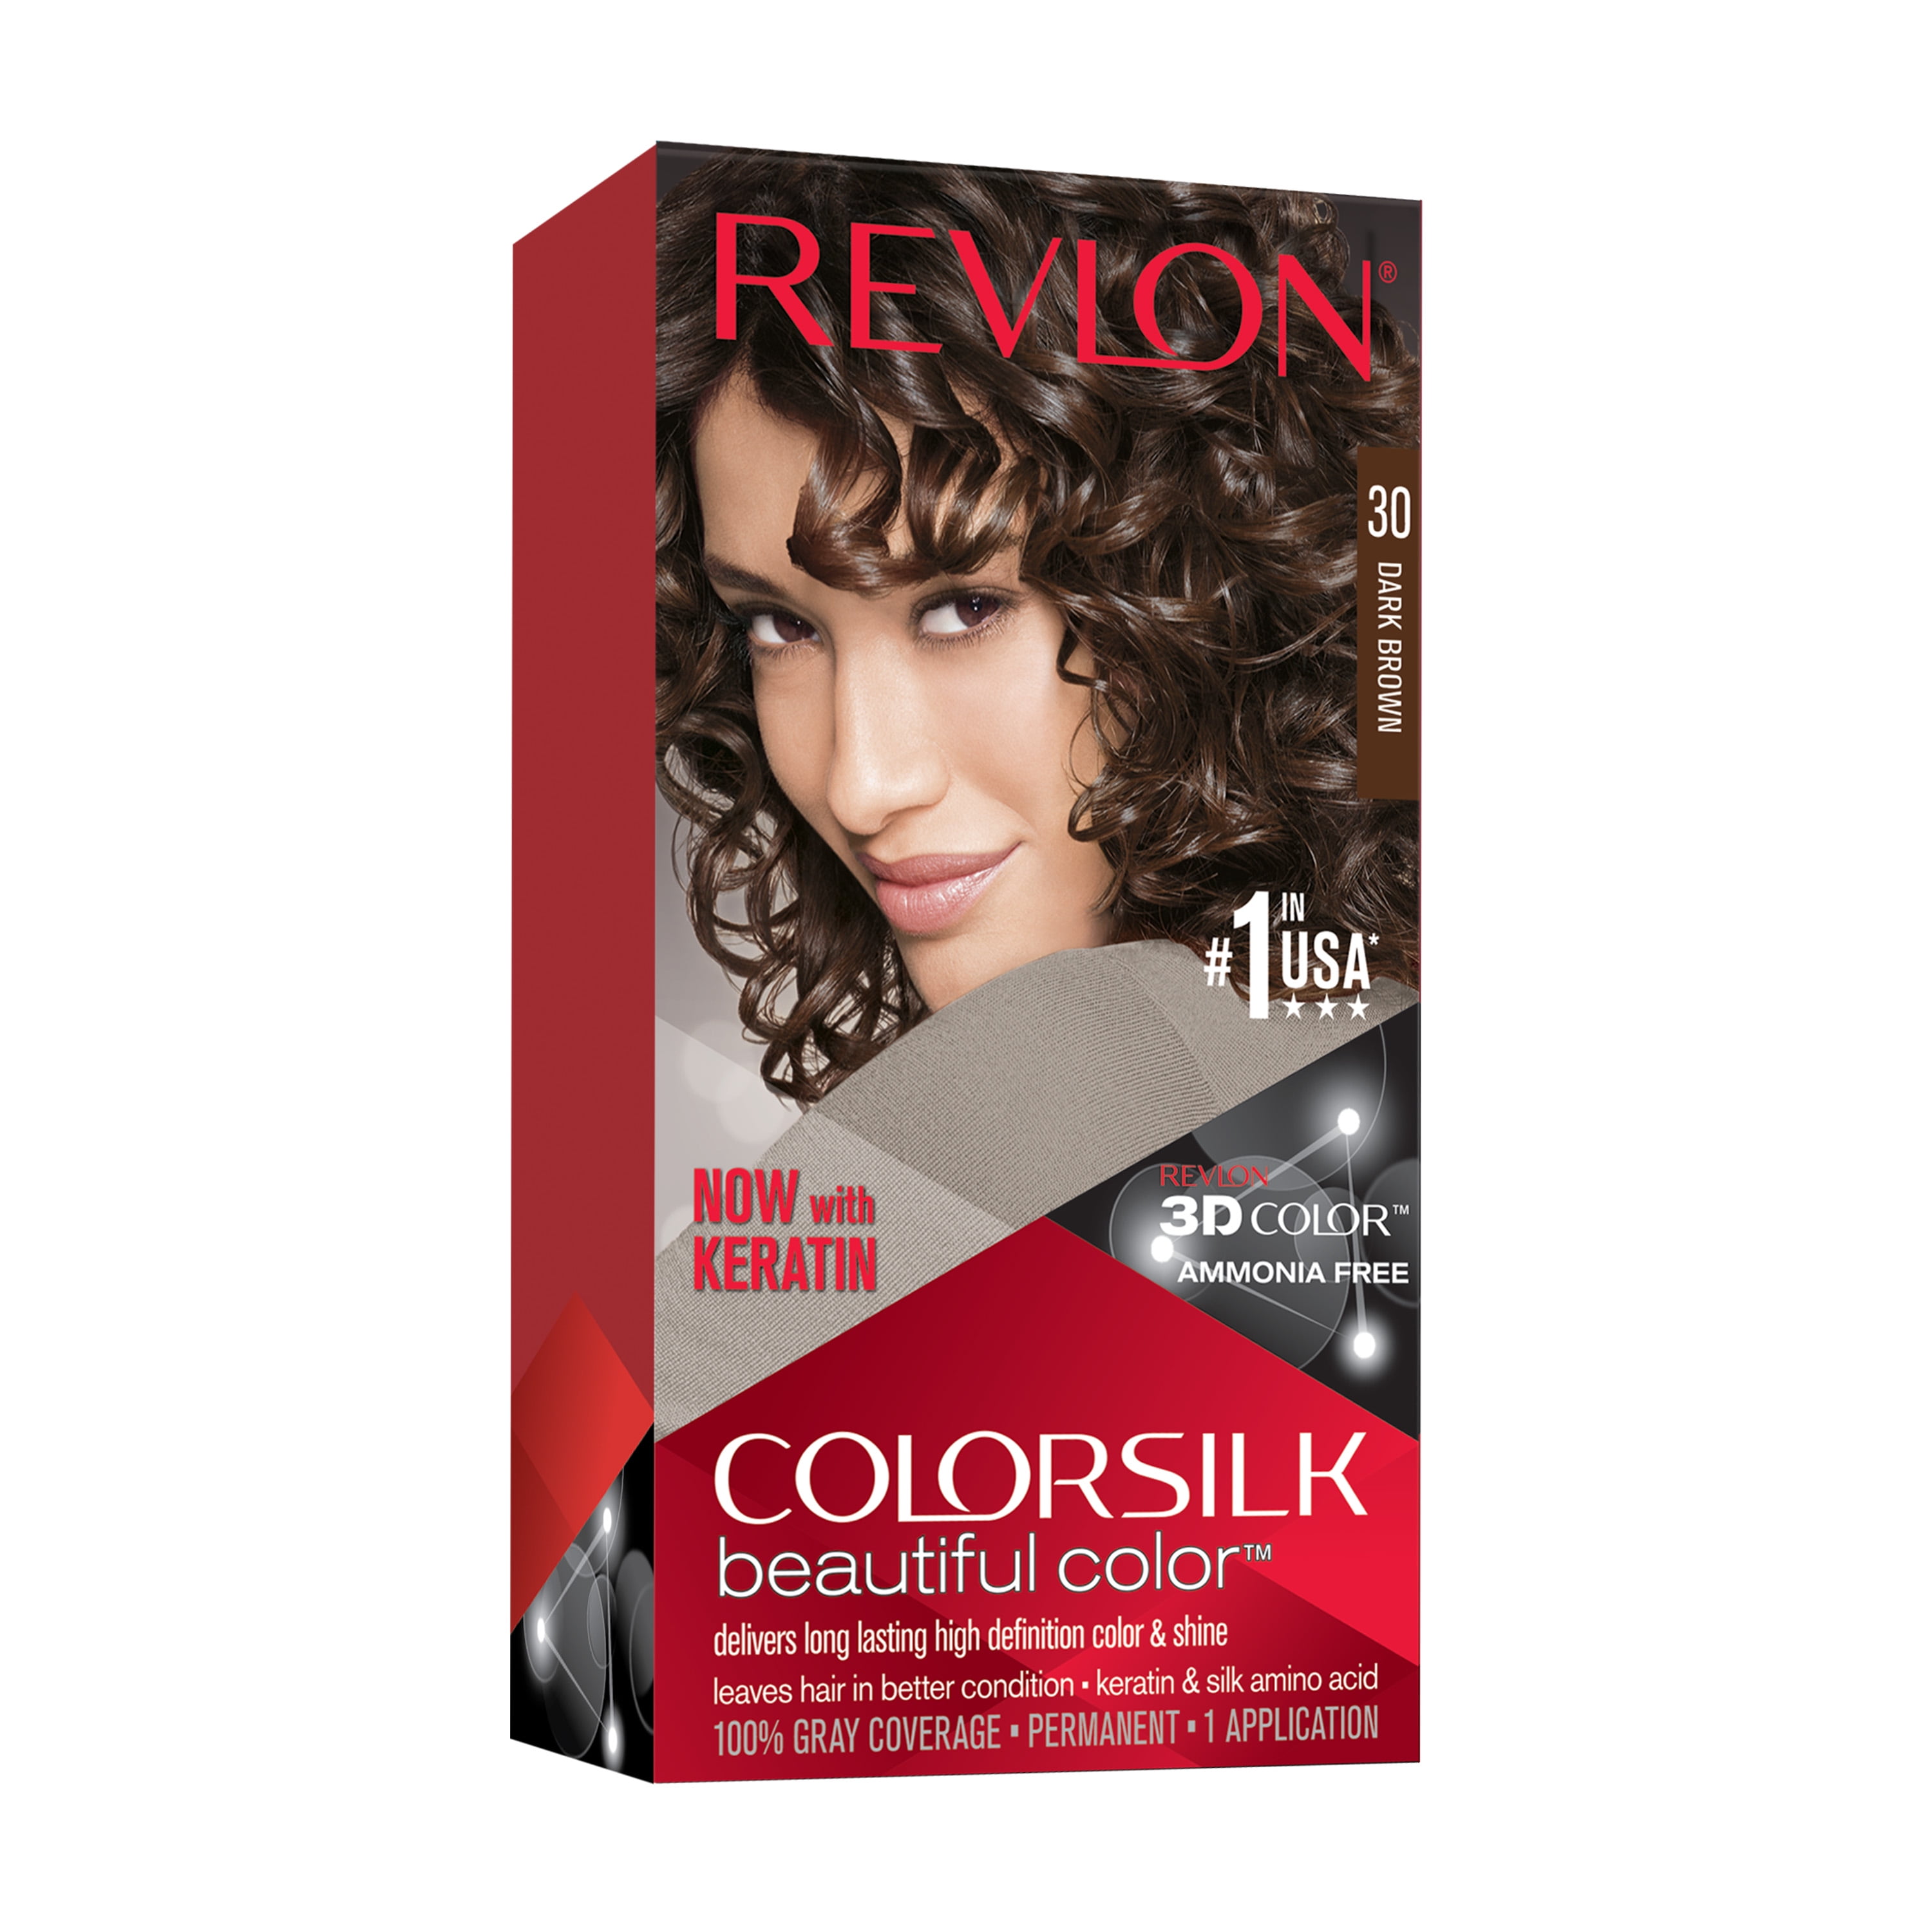 Revlon Colorsilk Beautiful Color Permanent Hair Dye With Keratin 100 Gray Coverage Ammonia Free 30 Dark Brown Walmart Com Walmart Com,Painting And Decorating Jobs Spain